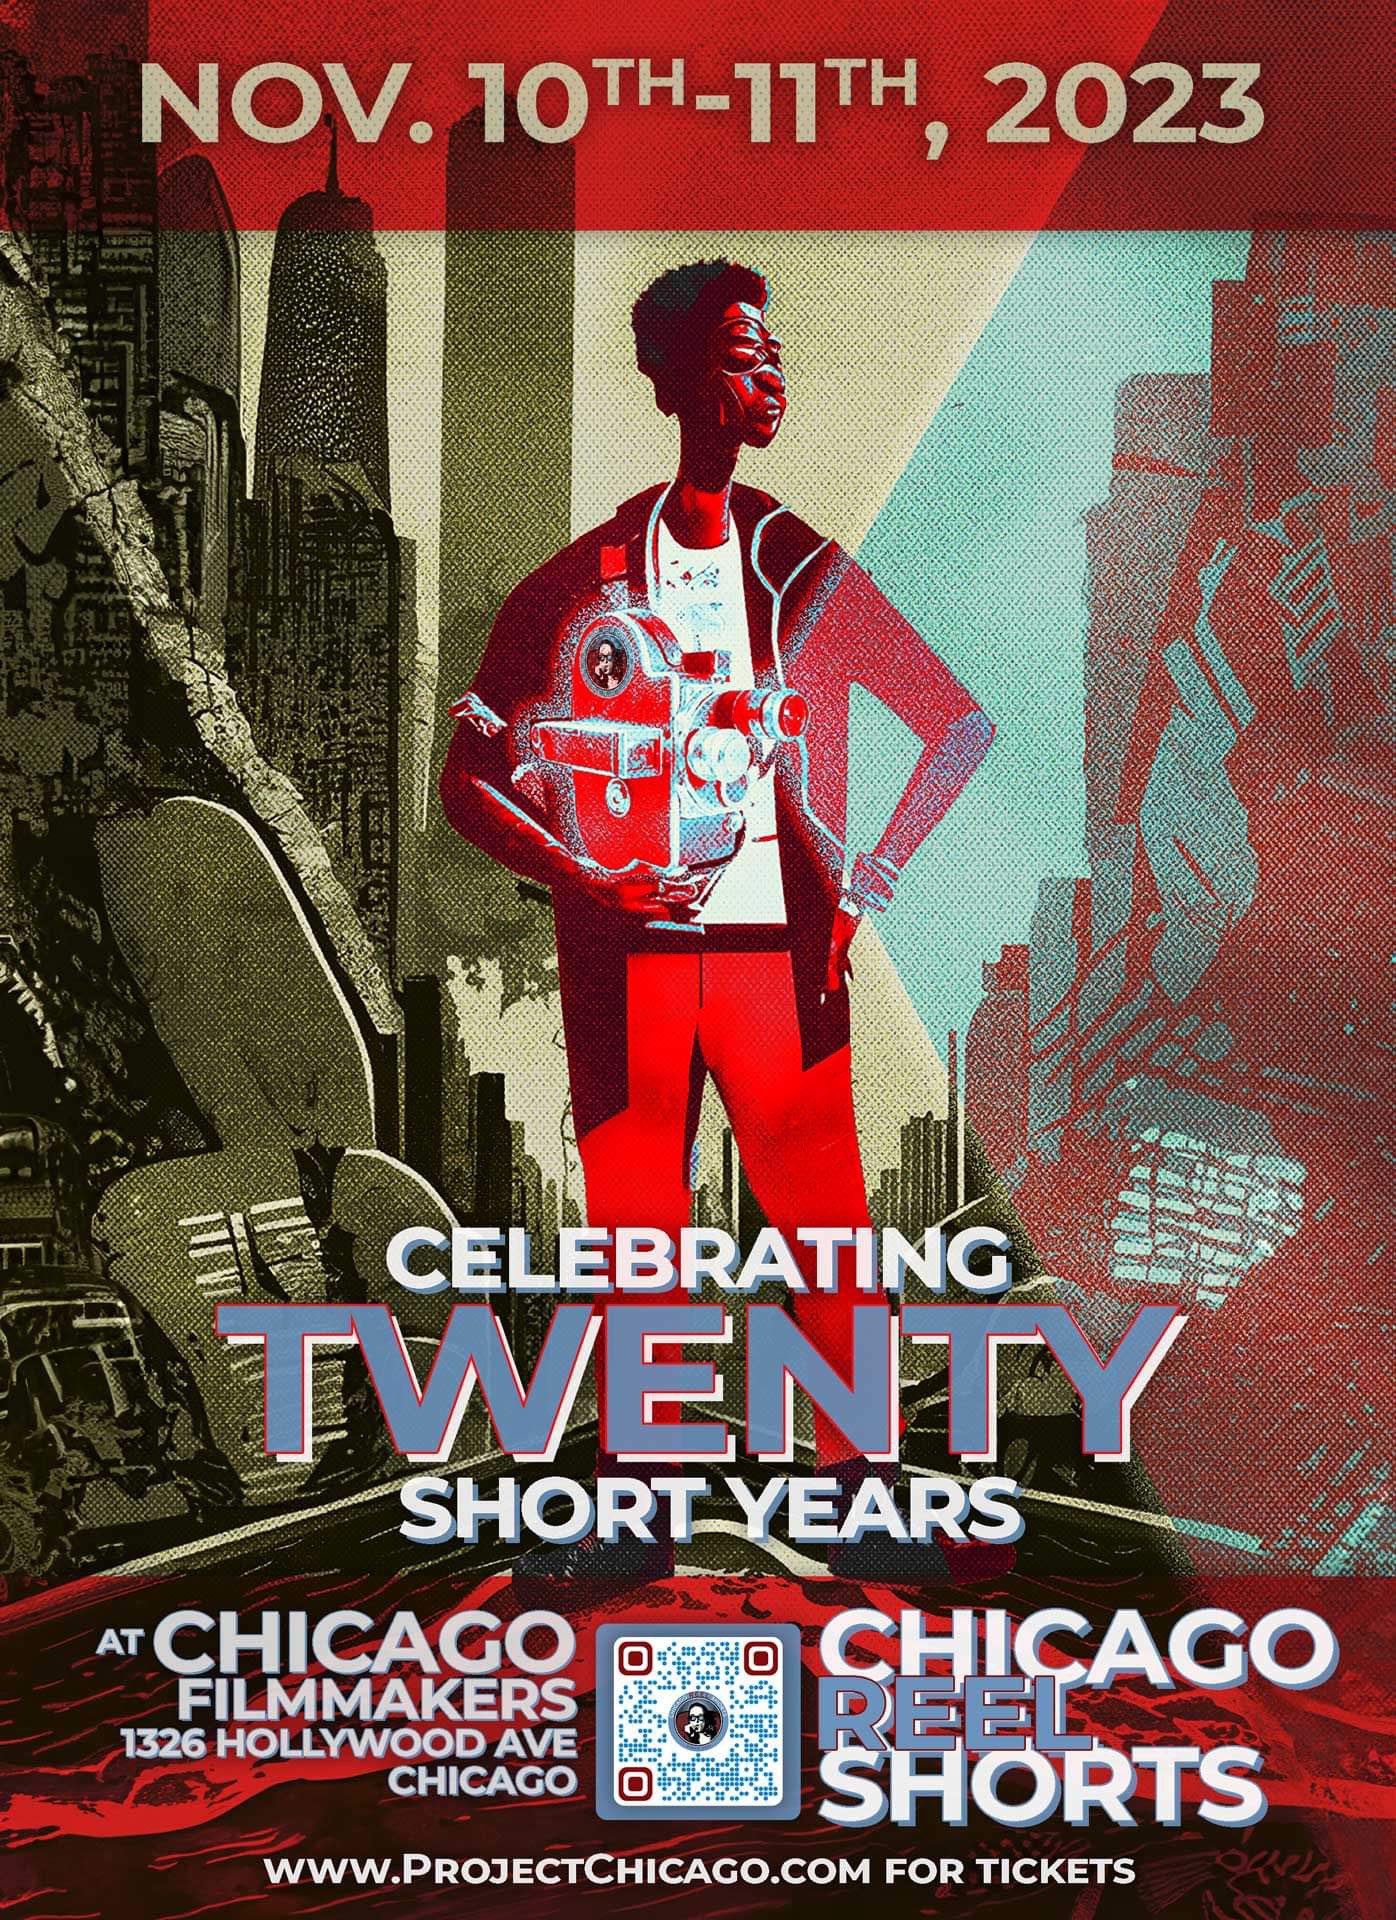 Chicago International REEL Shorts Film Festival (@CIRSF) / X